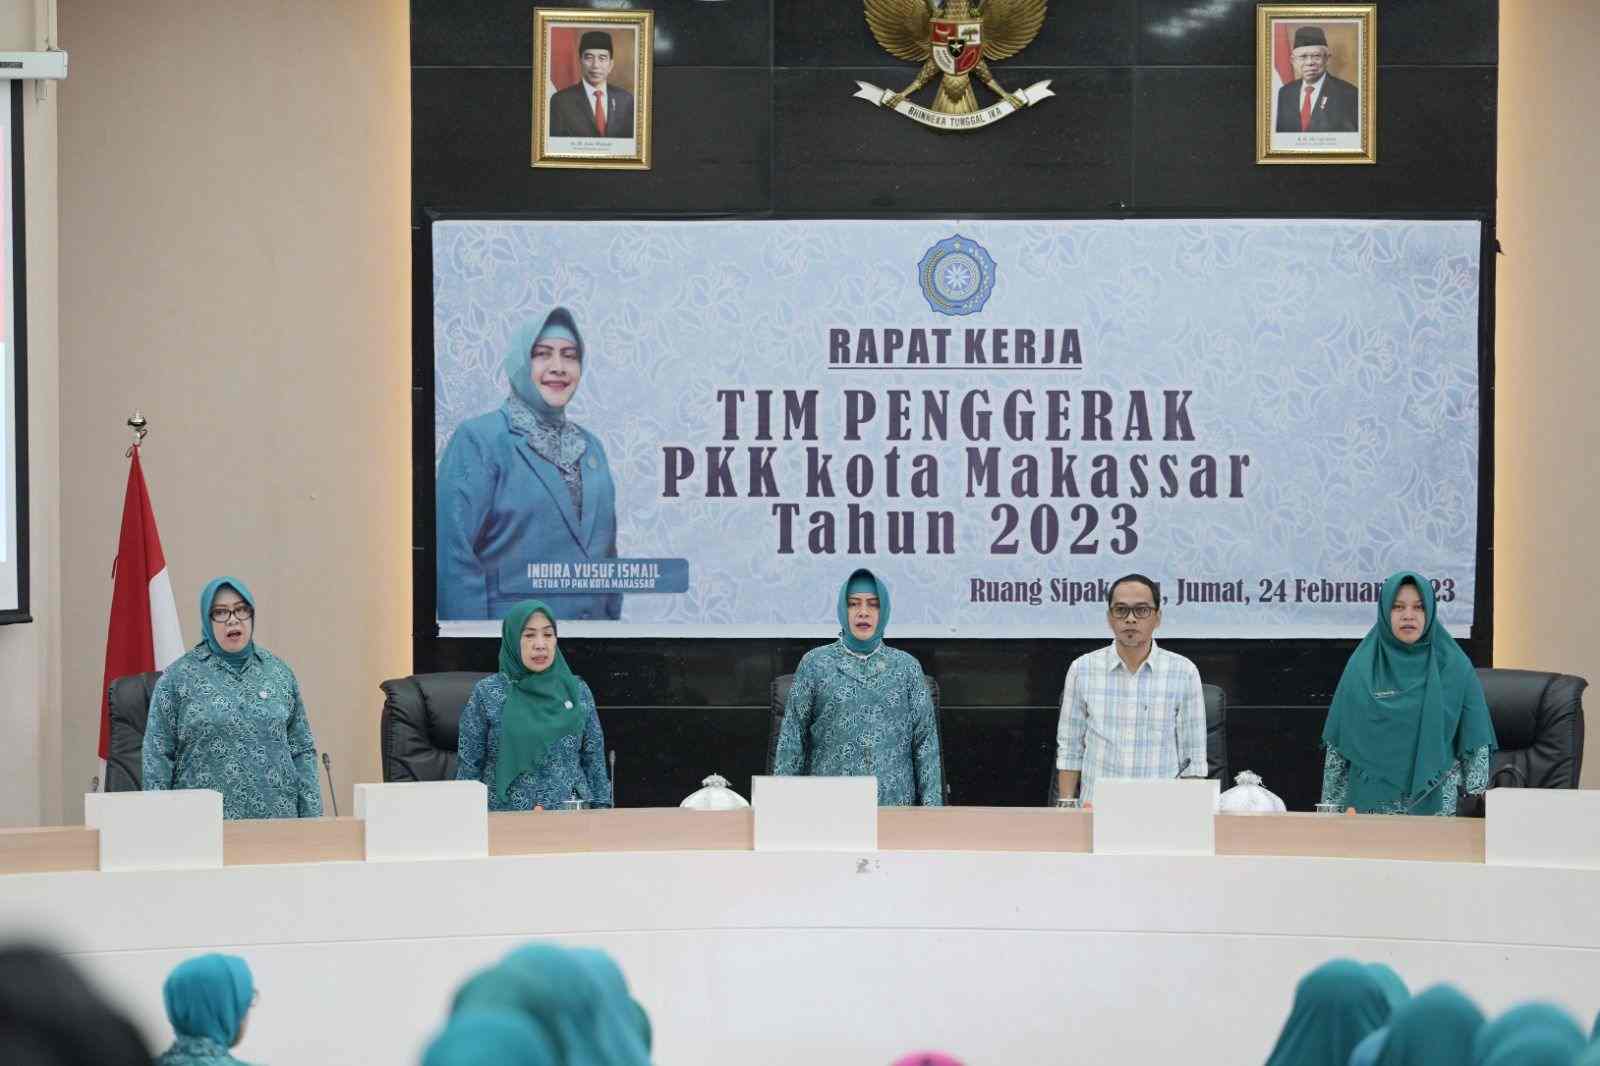 Ketua TP PKK Kota Makassar Indira Yusuf Ismail mengukuhkan jajaran pengurus antar waktu TP PKK Kota Makassar. (Dok.Ist)